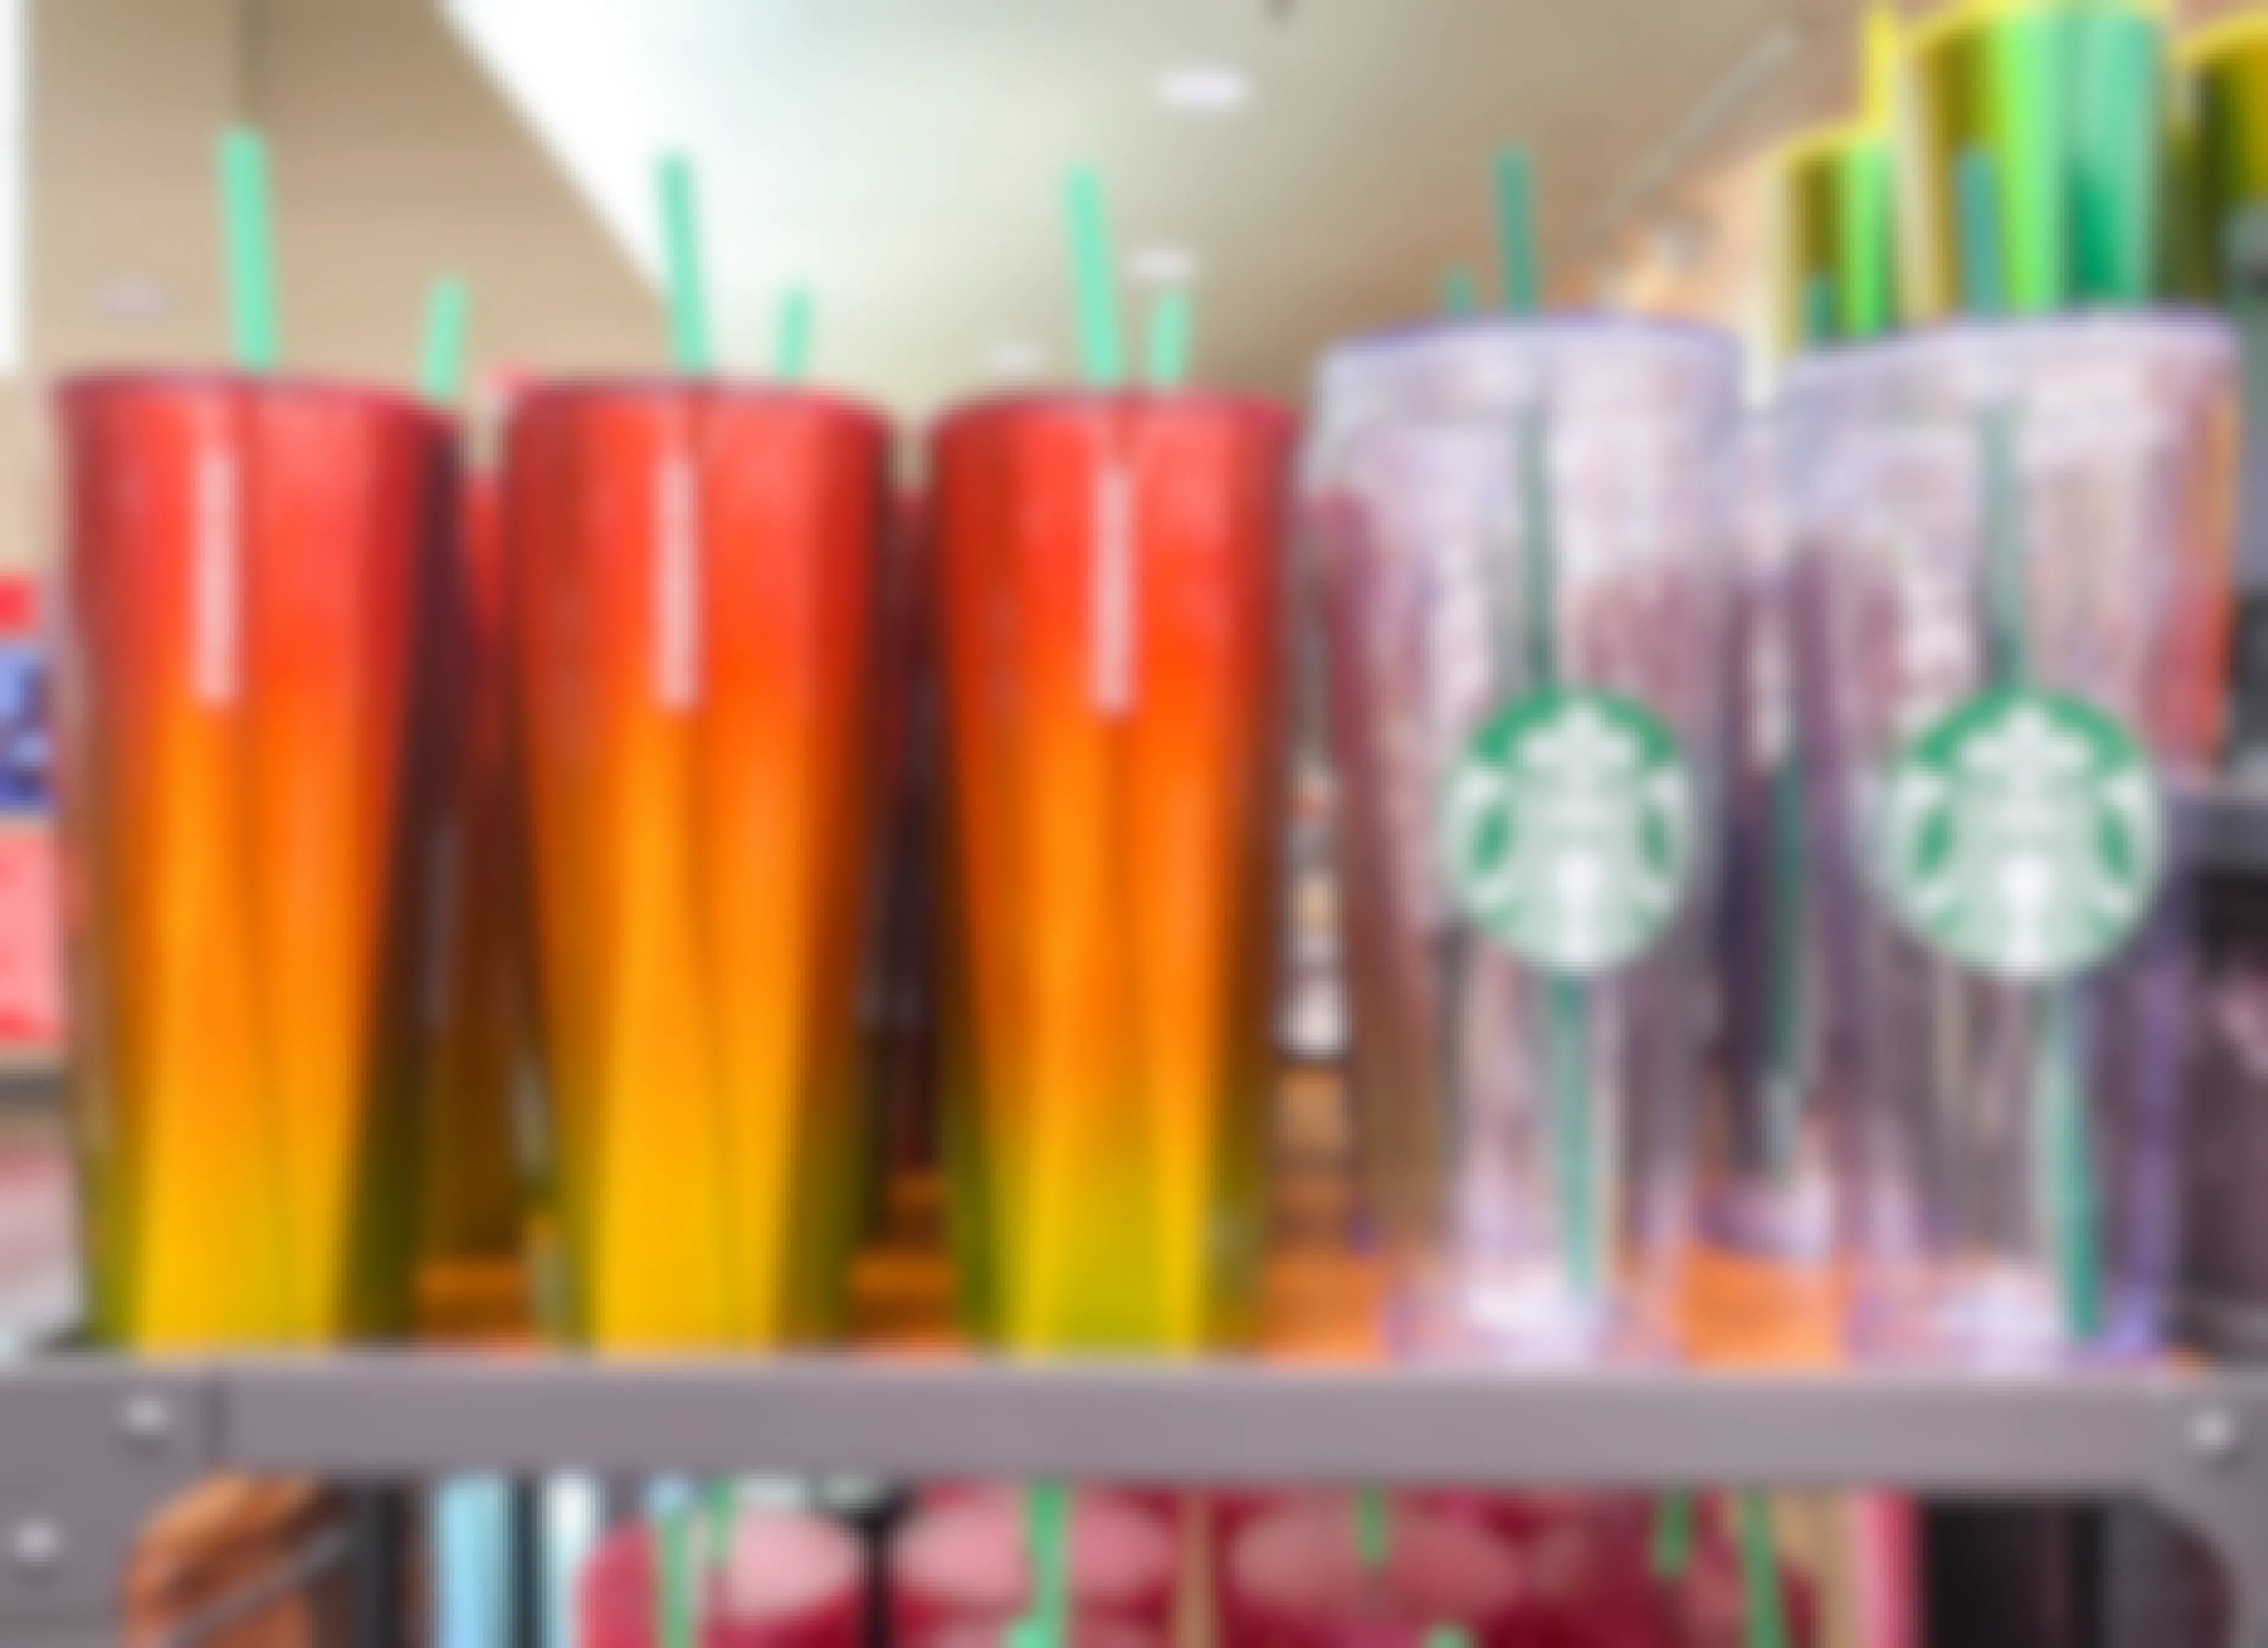 Starbucks reusable tumbler cups on a shelf inside a Starbucks cafe.